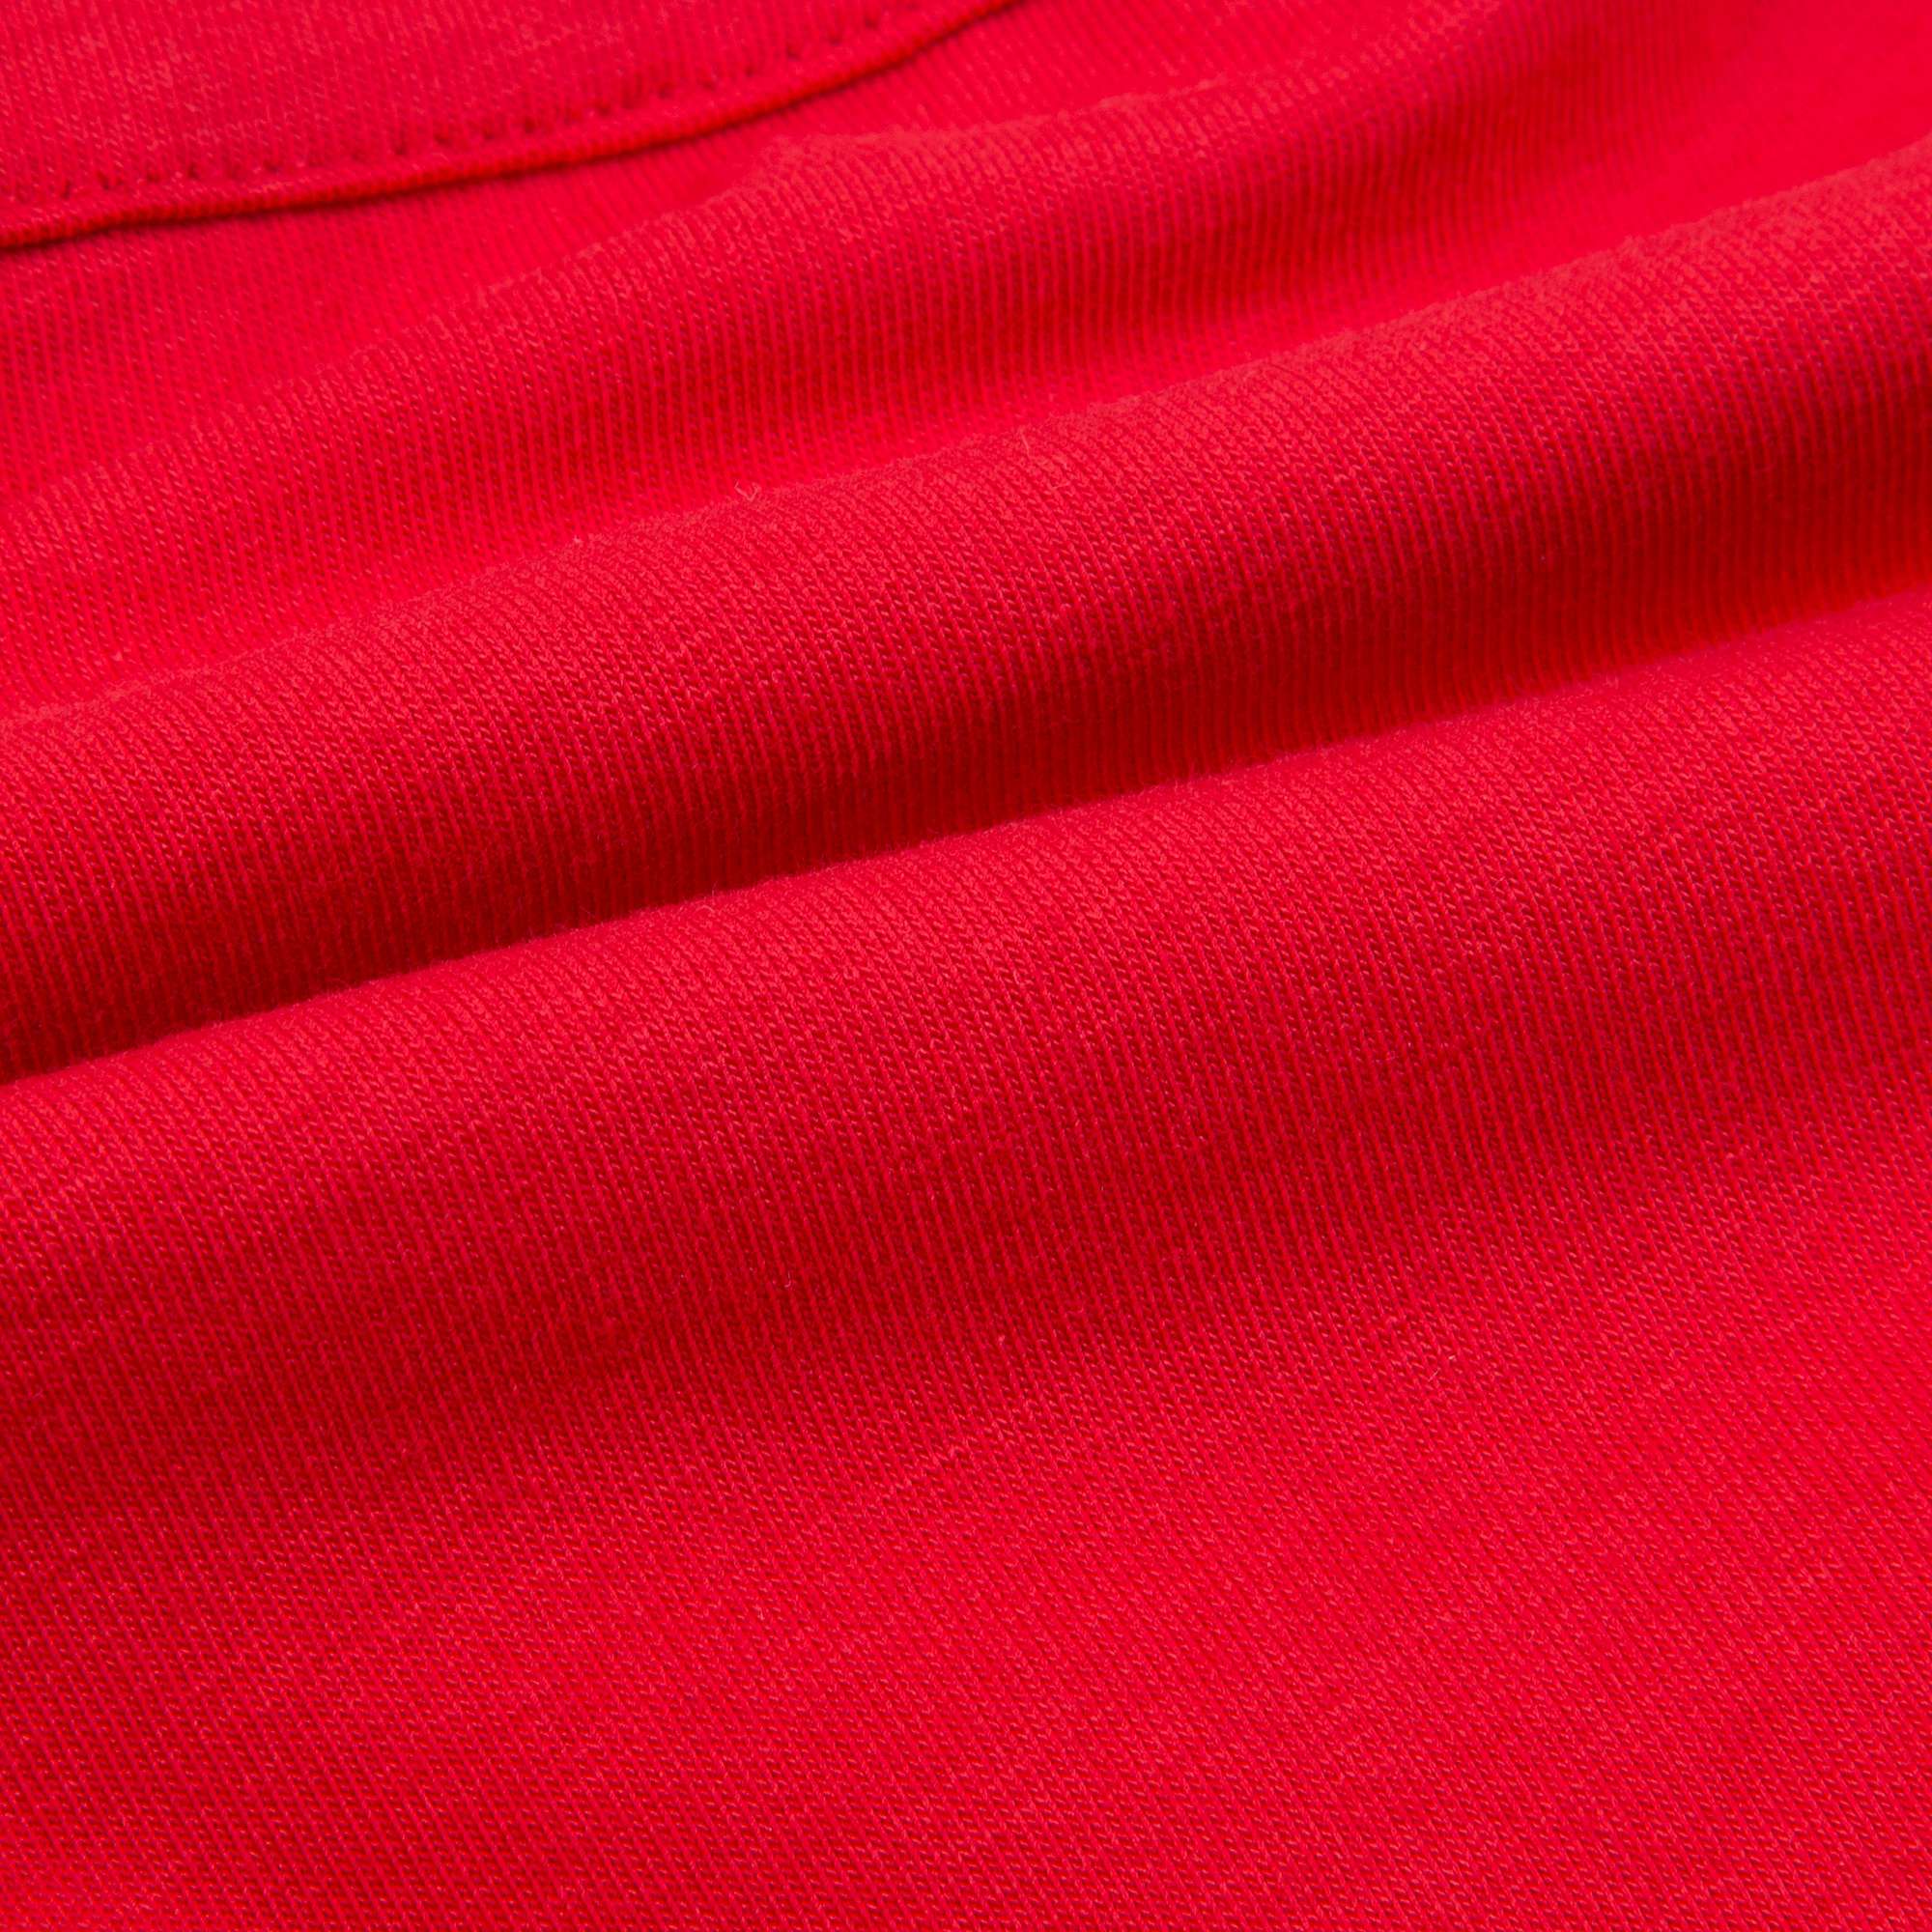 Baby Girls Red Stripes Cotton Set